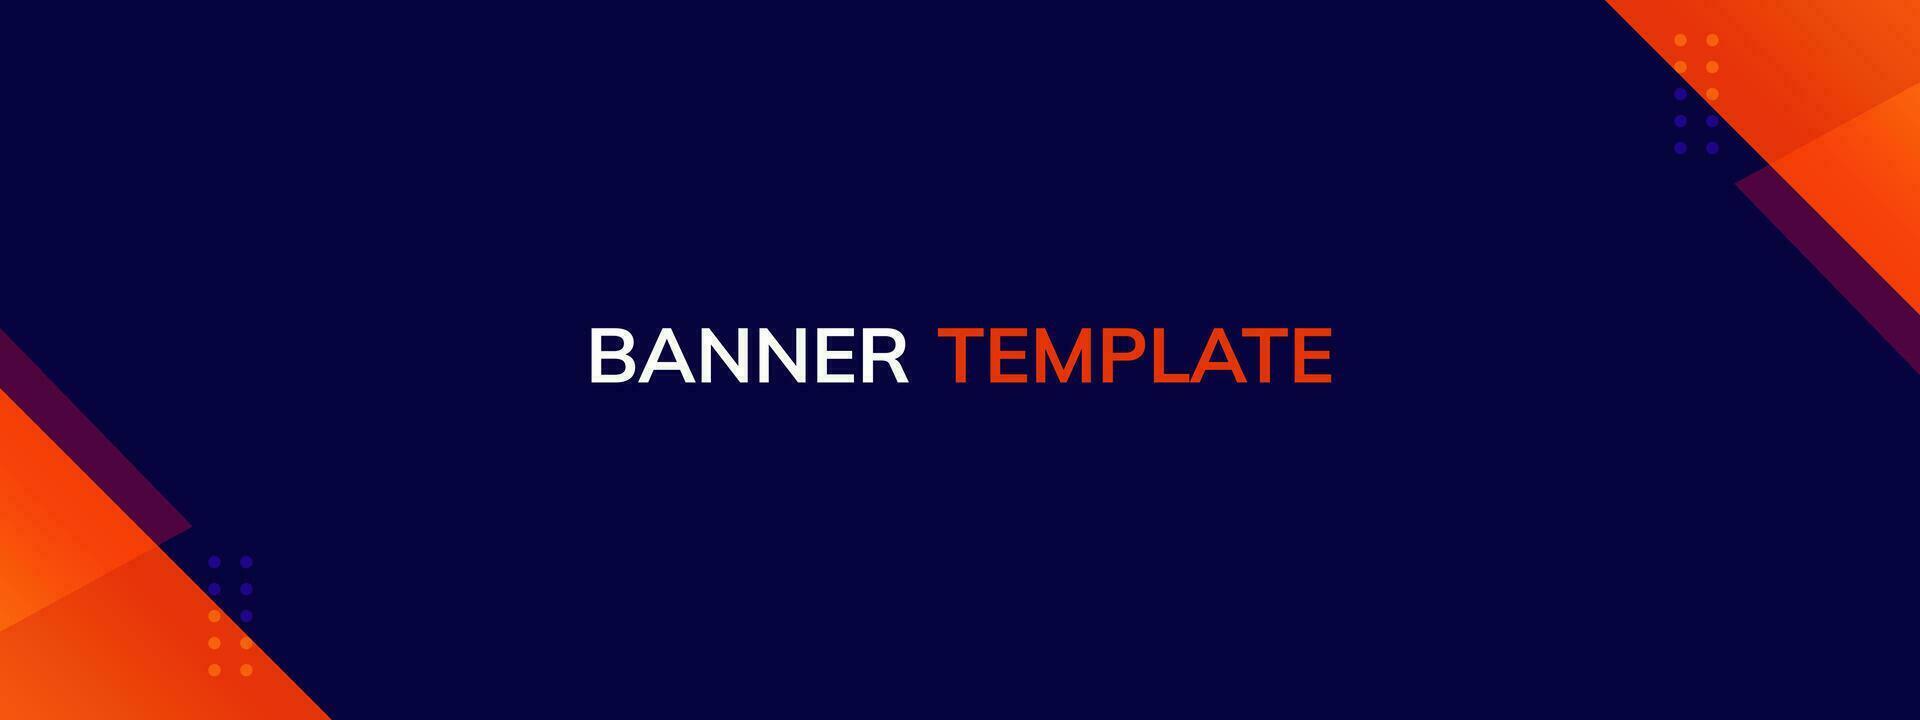 Modern banner template. Corporate banner design vector